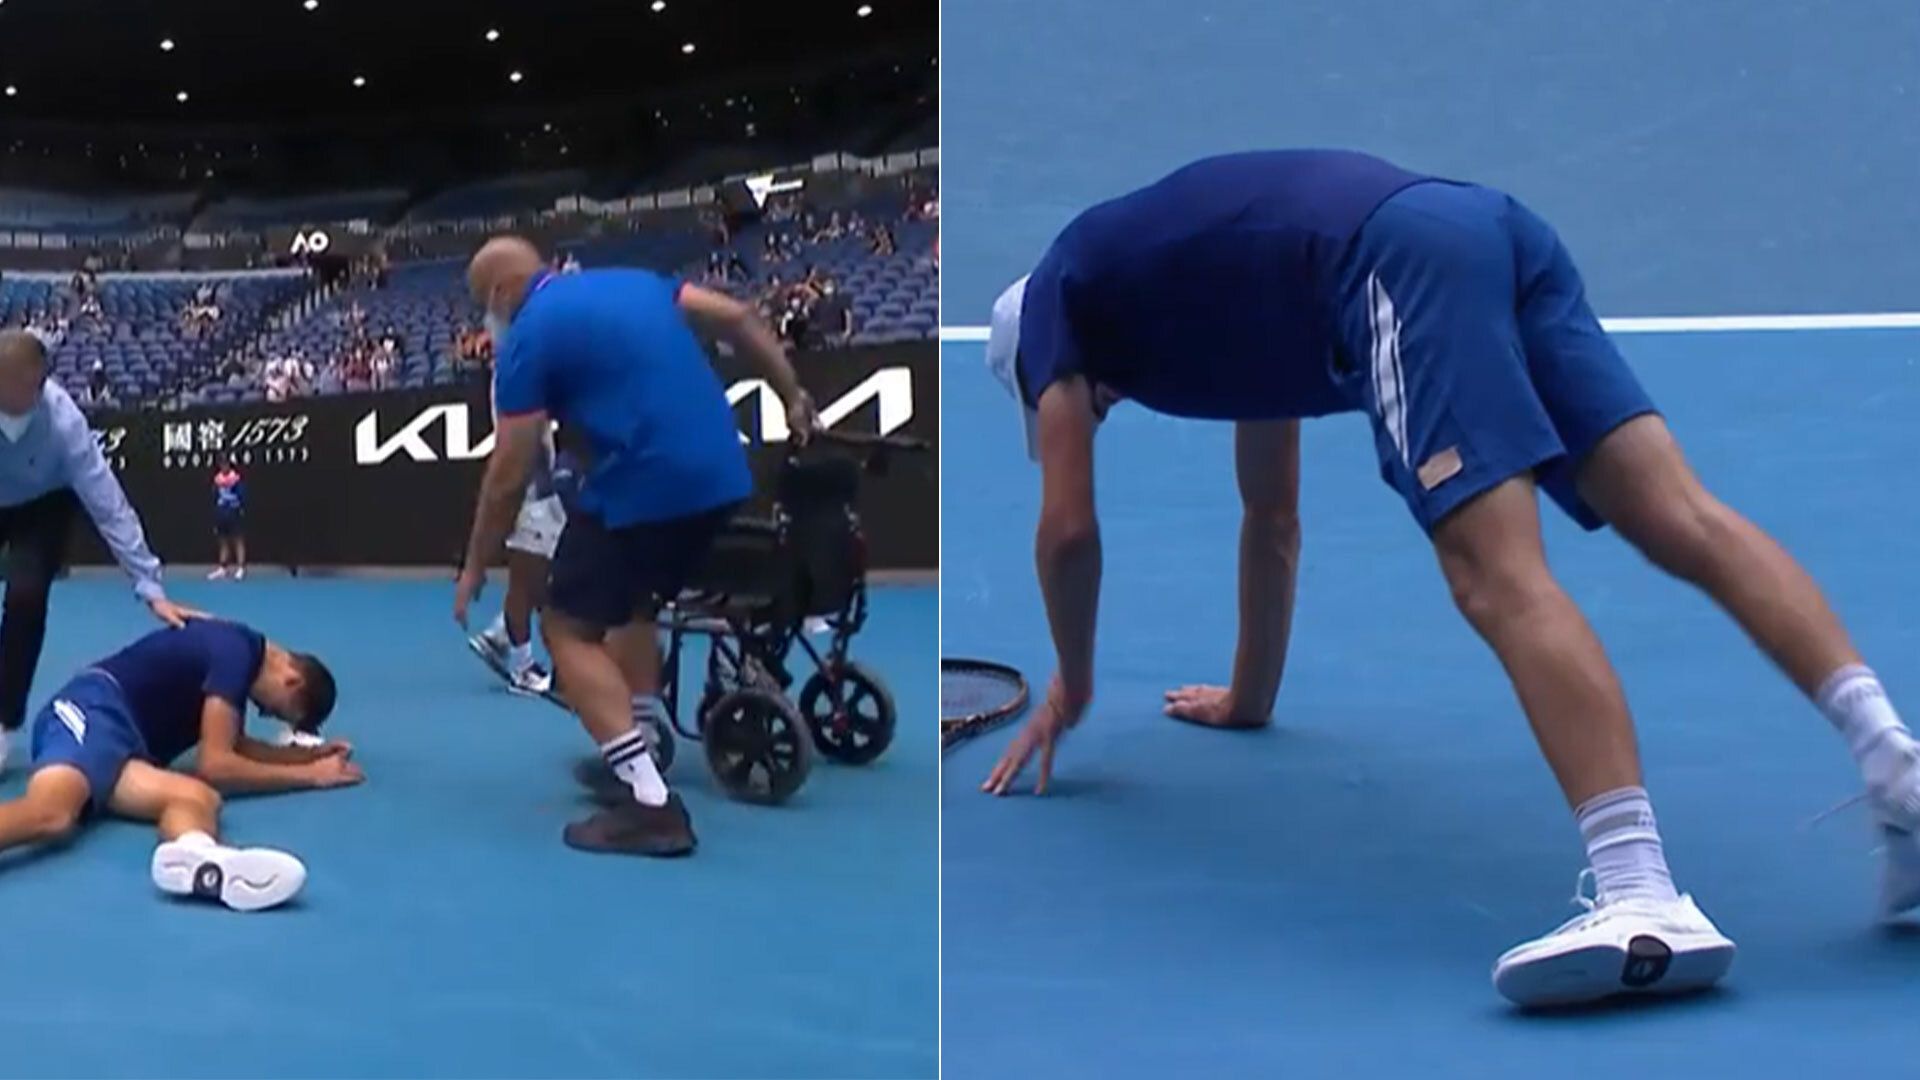 Jakub Mensik goes down with severe cramps in the junior boys Australian Open final.